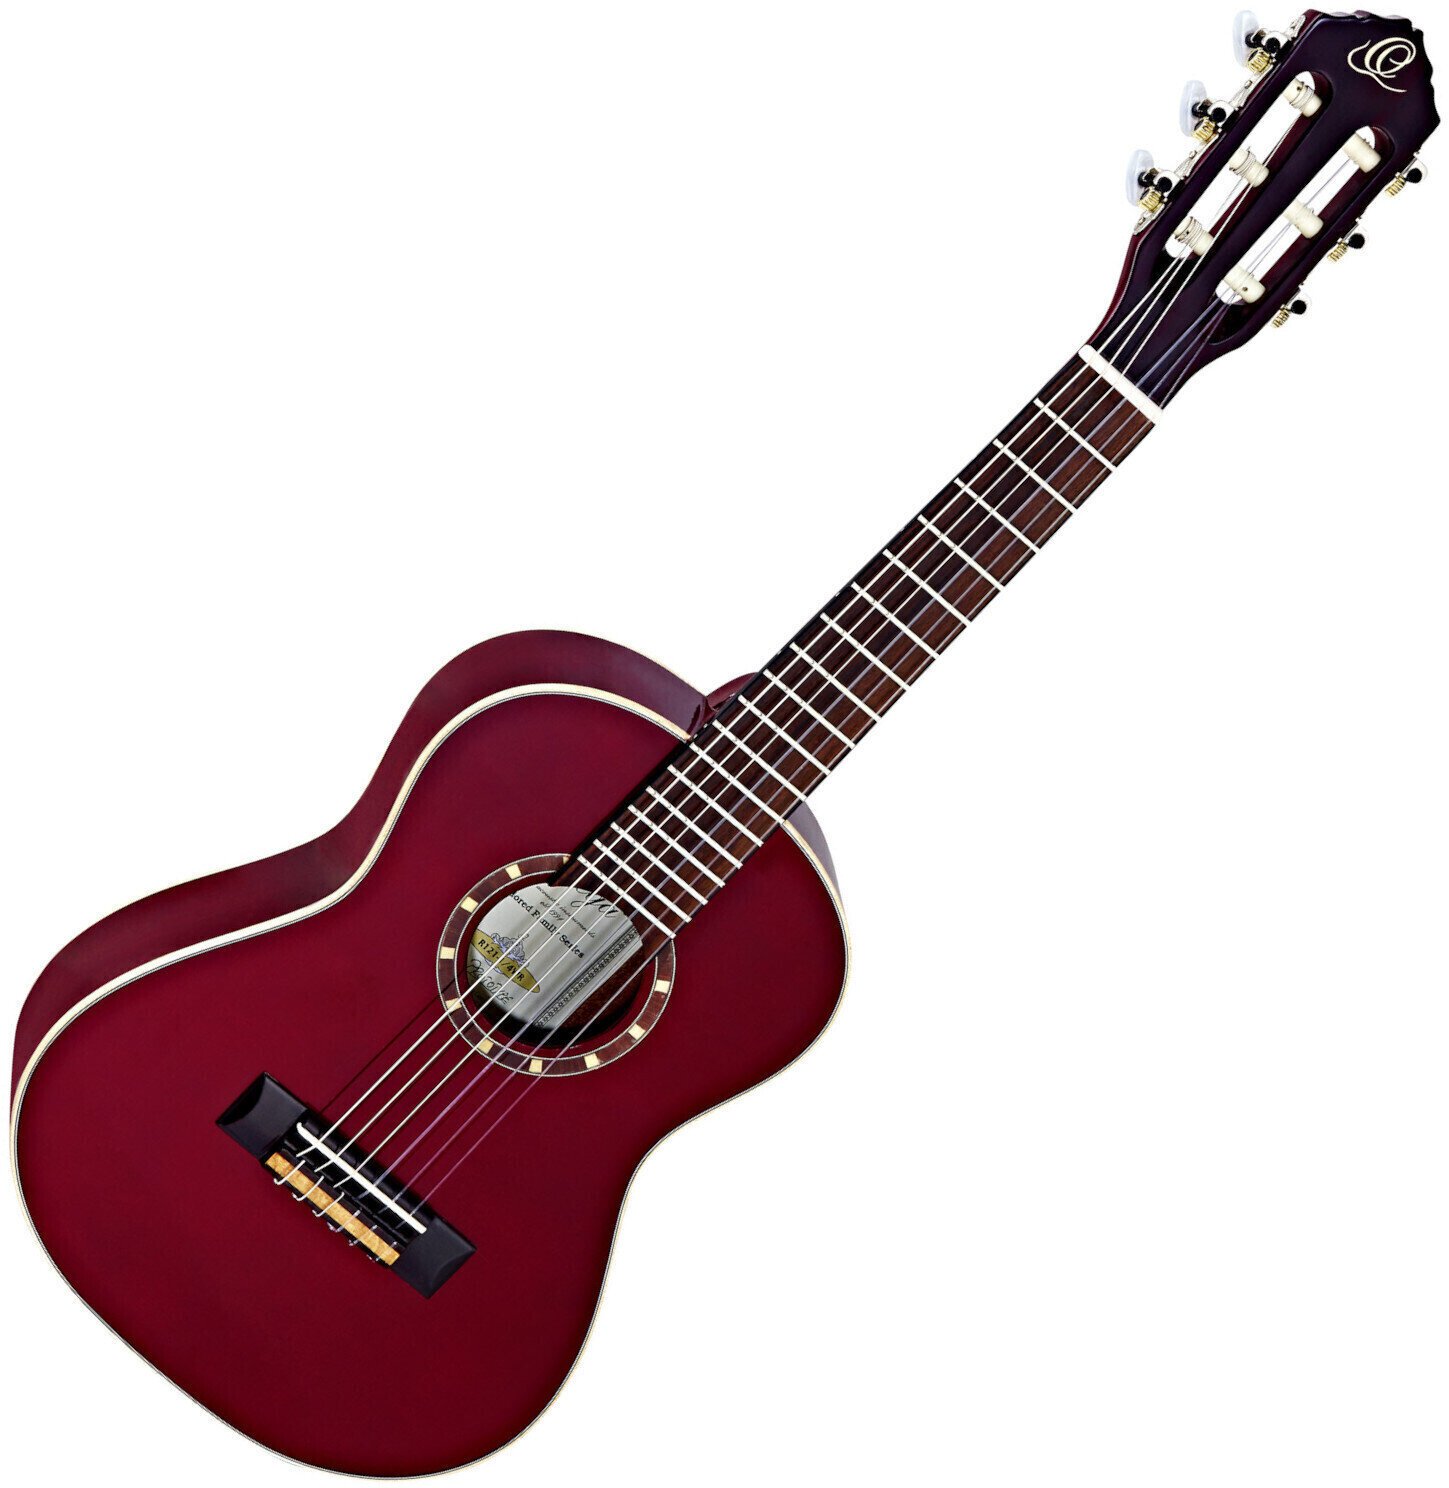 Guitare classique taile 1/4 pour enfant Ortega R121 1/4 Wine Red